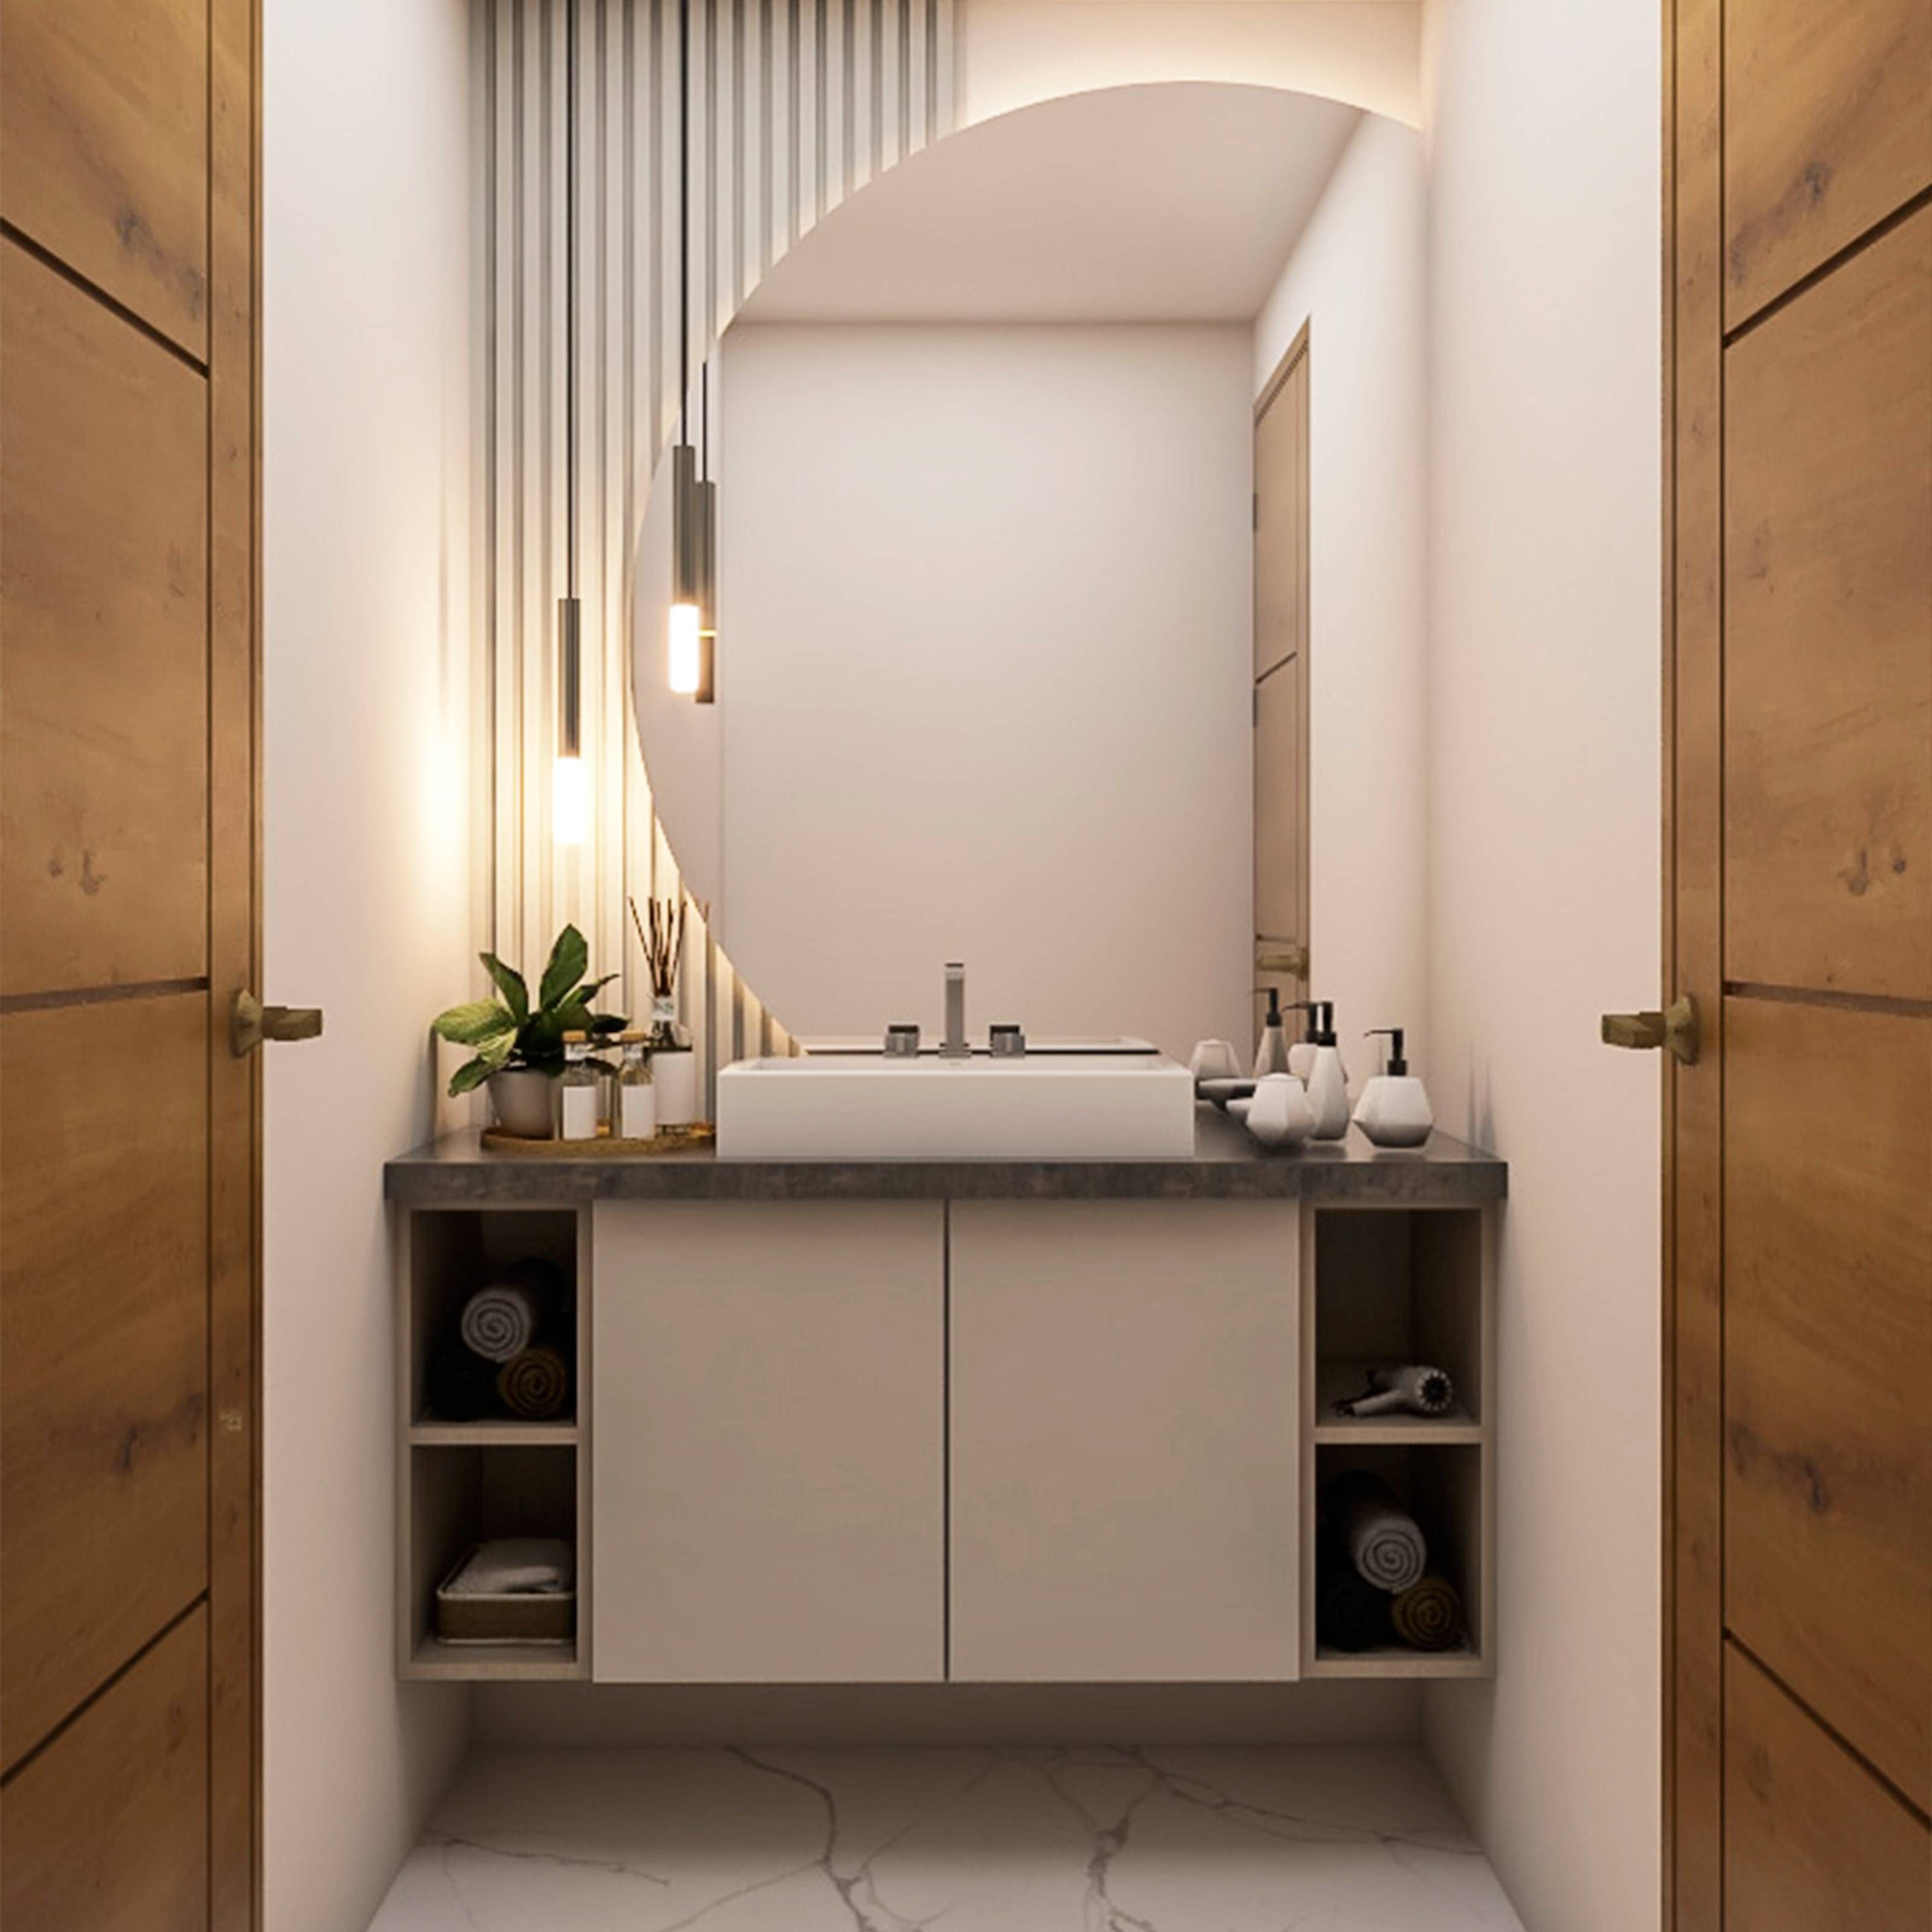 Modern Compact Bathroom Design With Semi-Circular Mirror